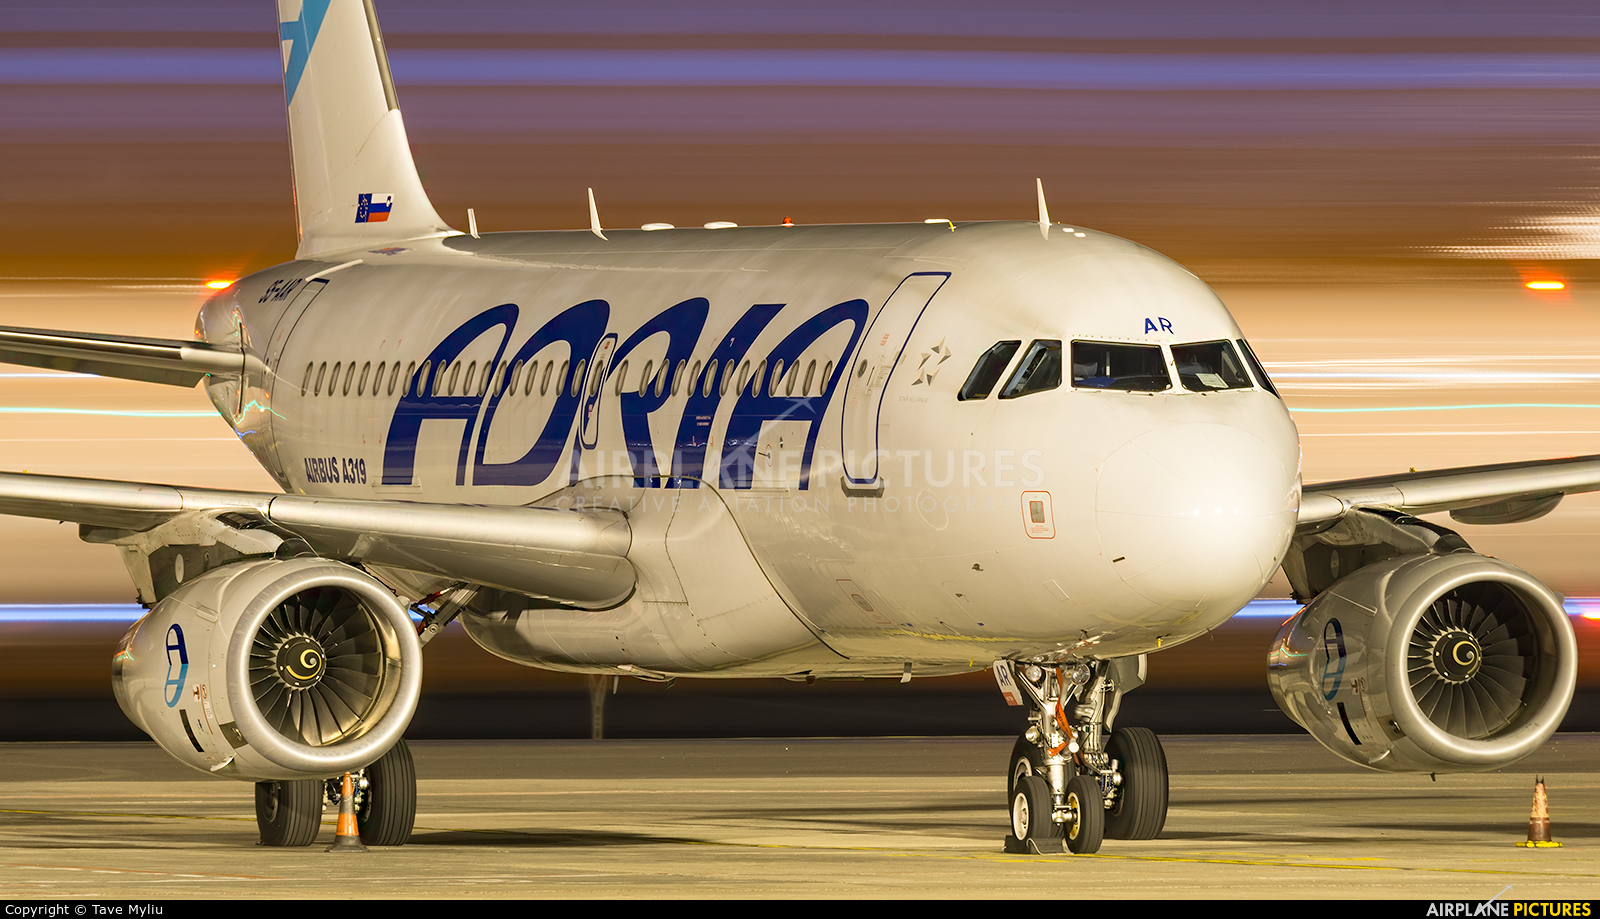 Adria Airways S5-AAR aircraft at Tenerife Sur - Reina Sofia